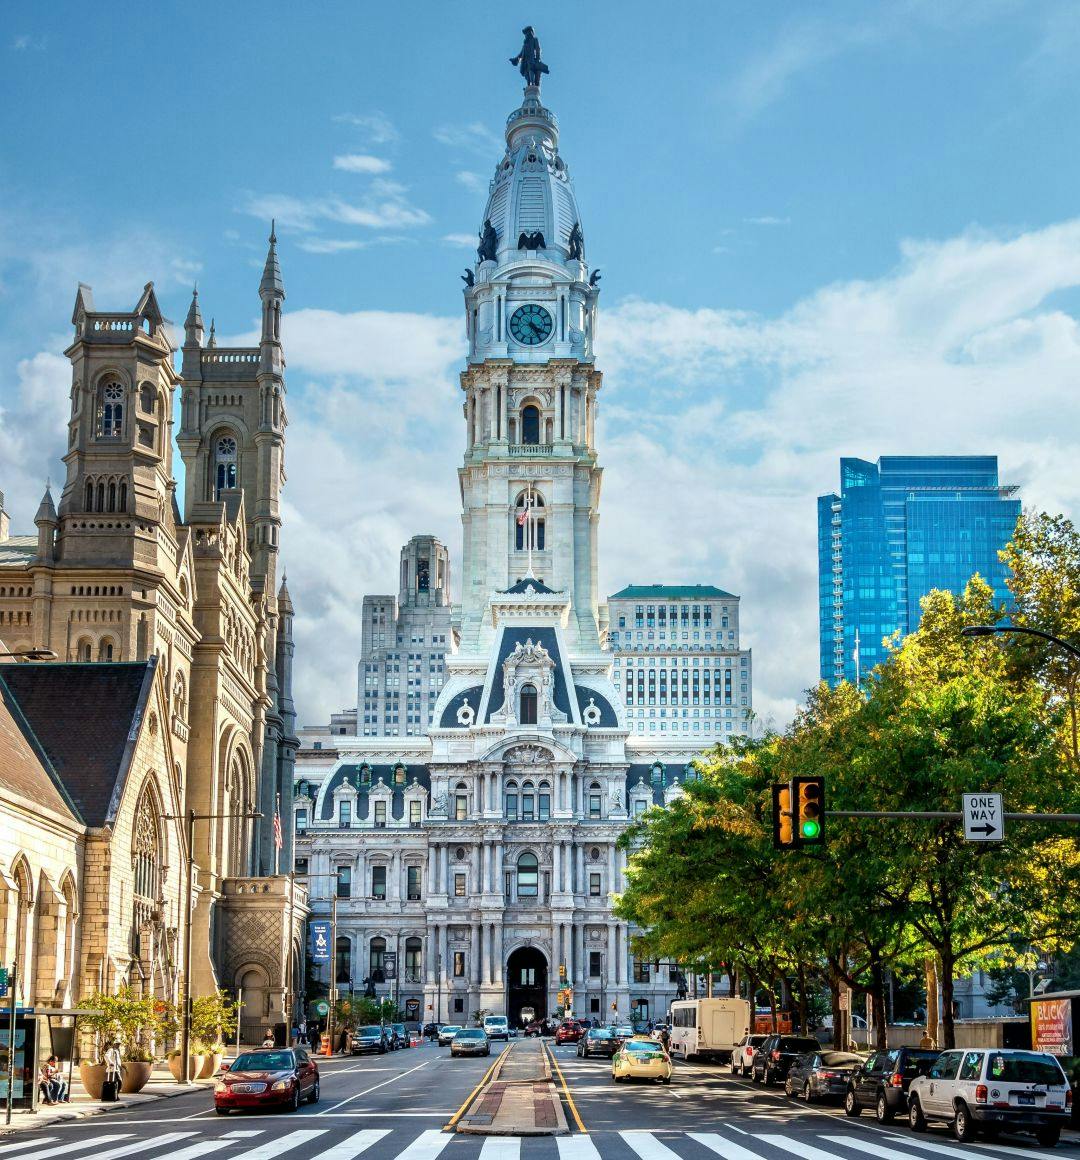 A historic building in Philadelphia